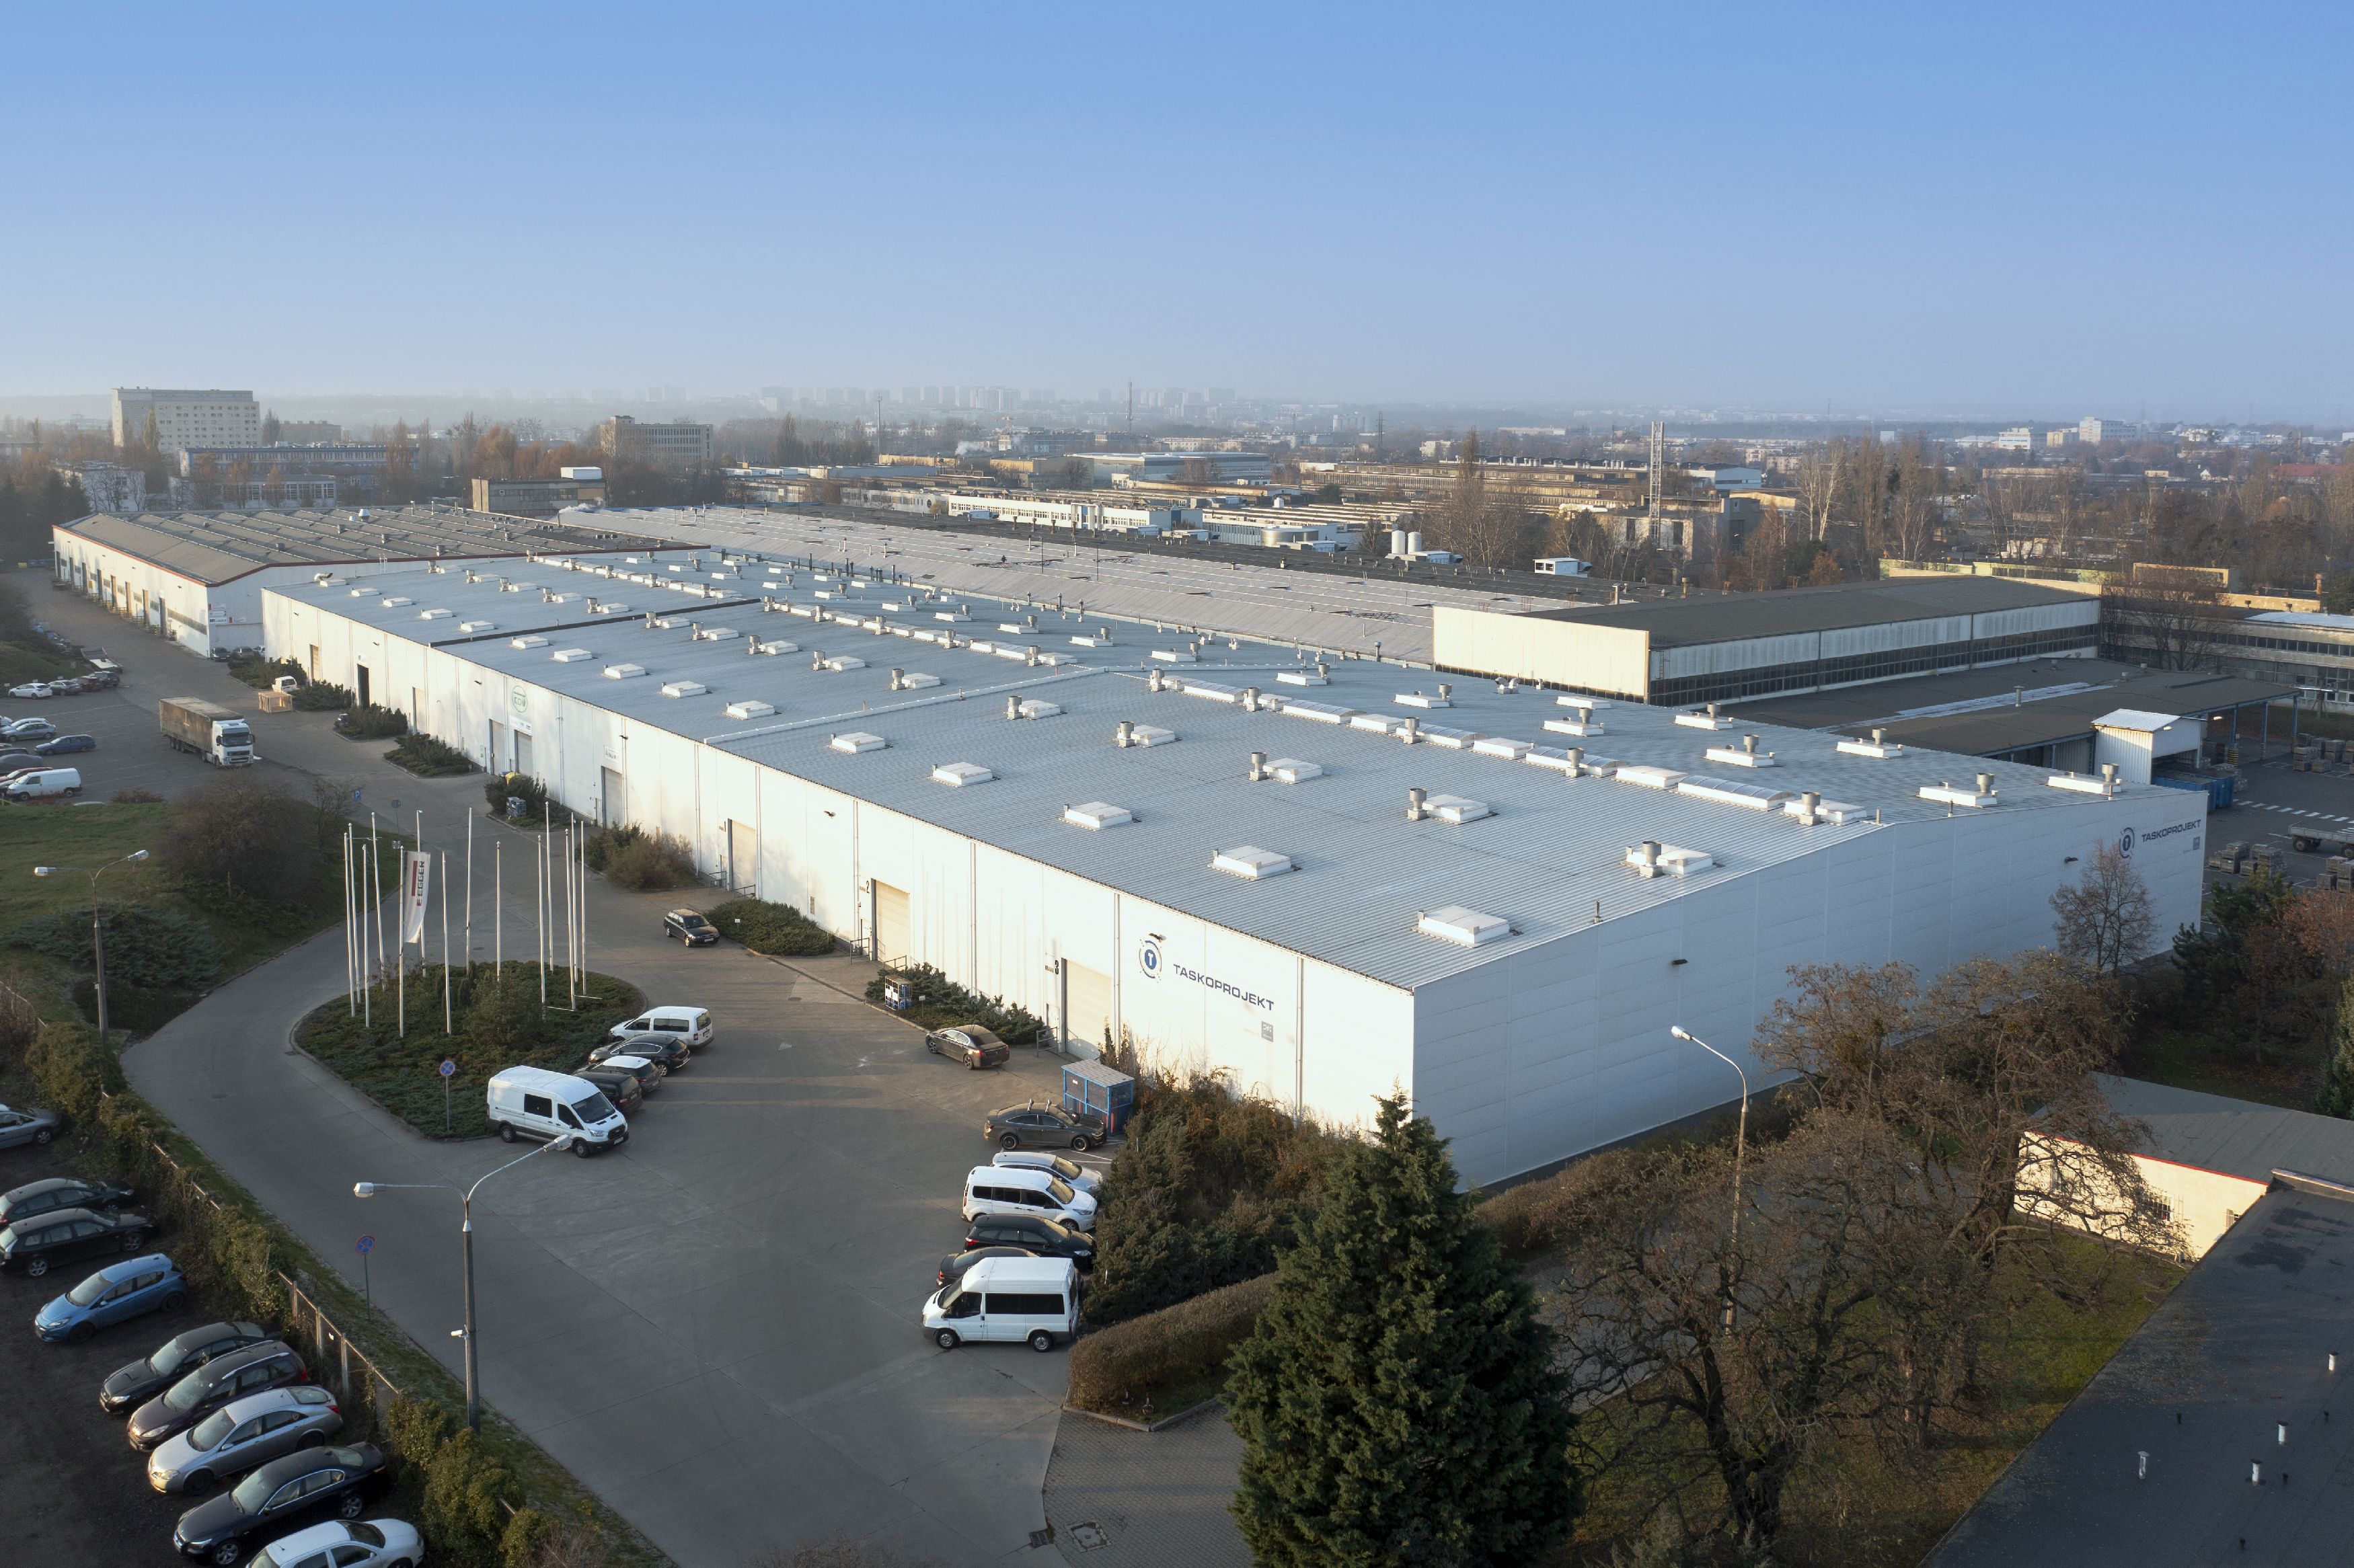 M7 acquired Mogilenska warehouse in Poznan